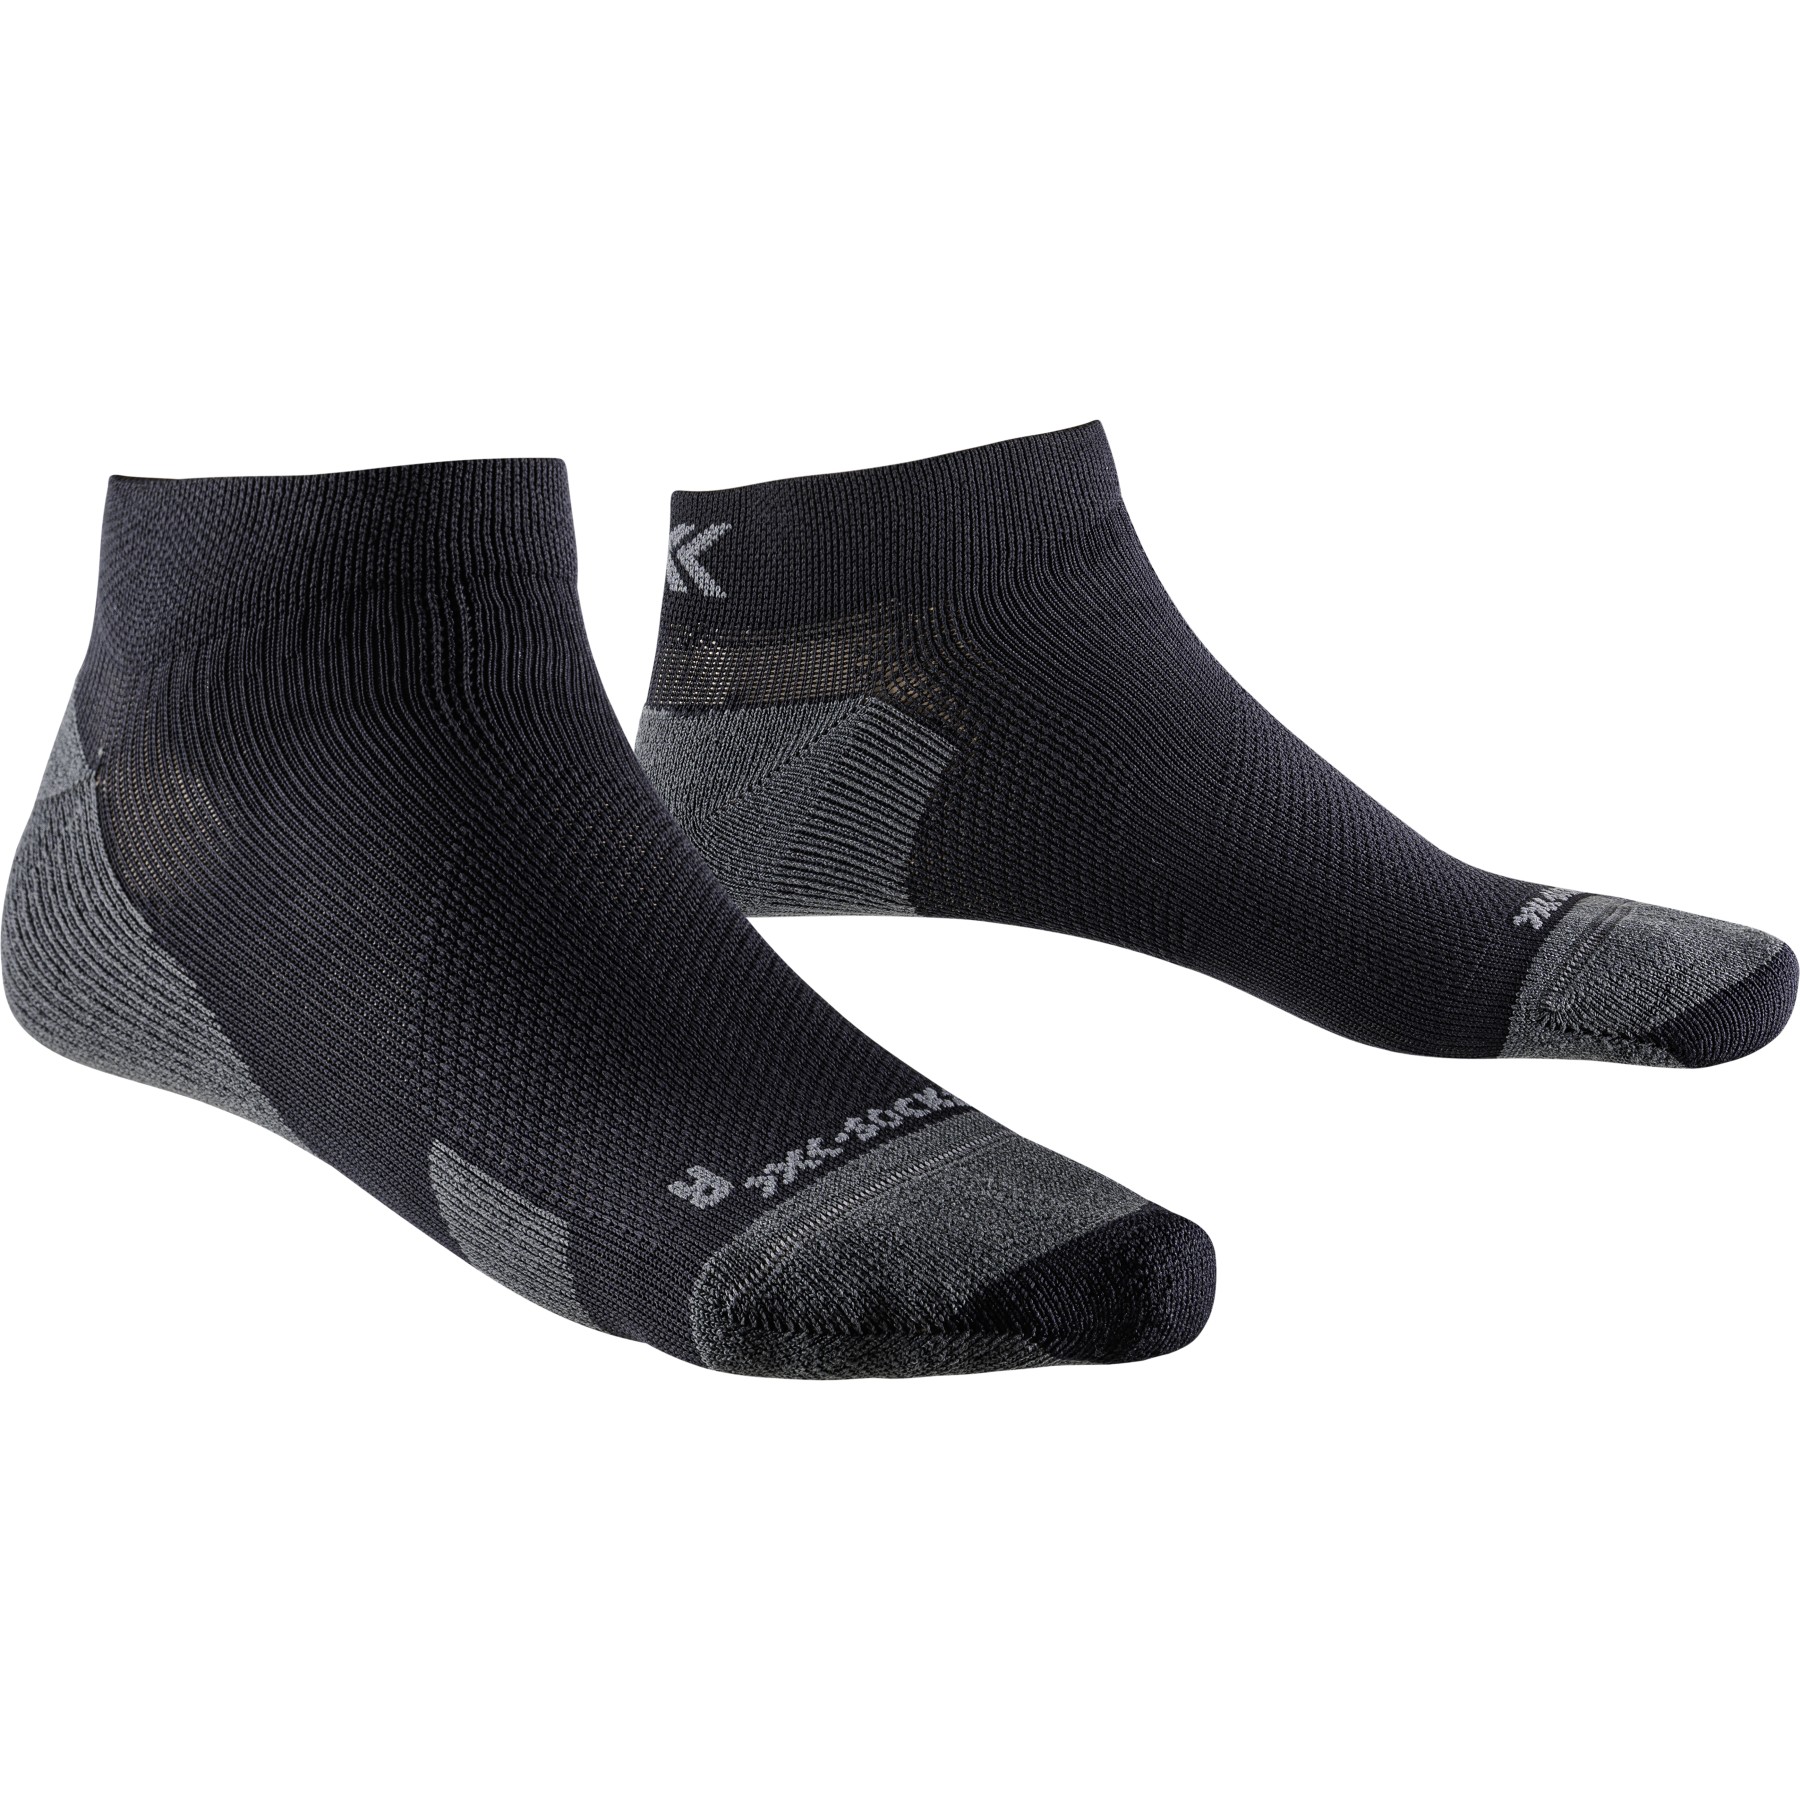 Produktbild von X-Socks Run Discover Low Cut Laufsocken - black/charcoal